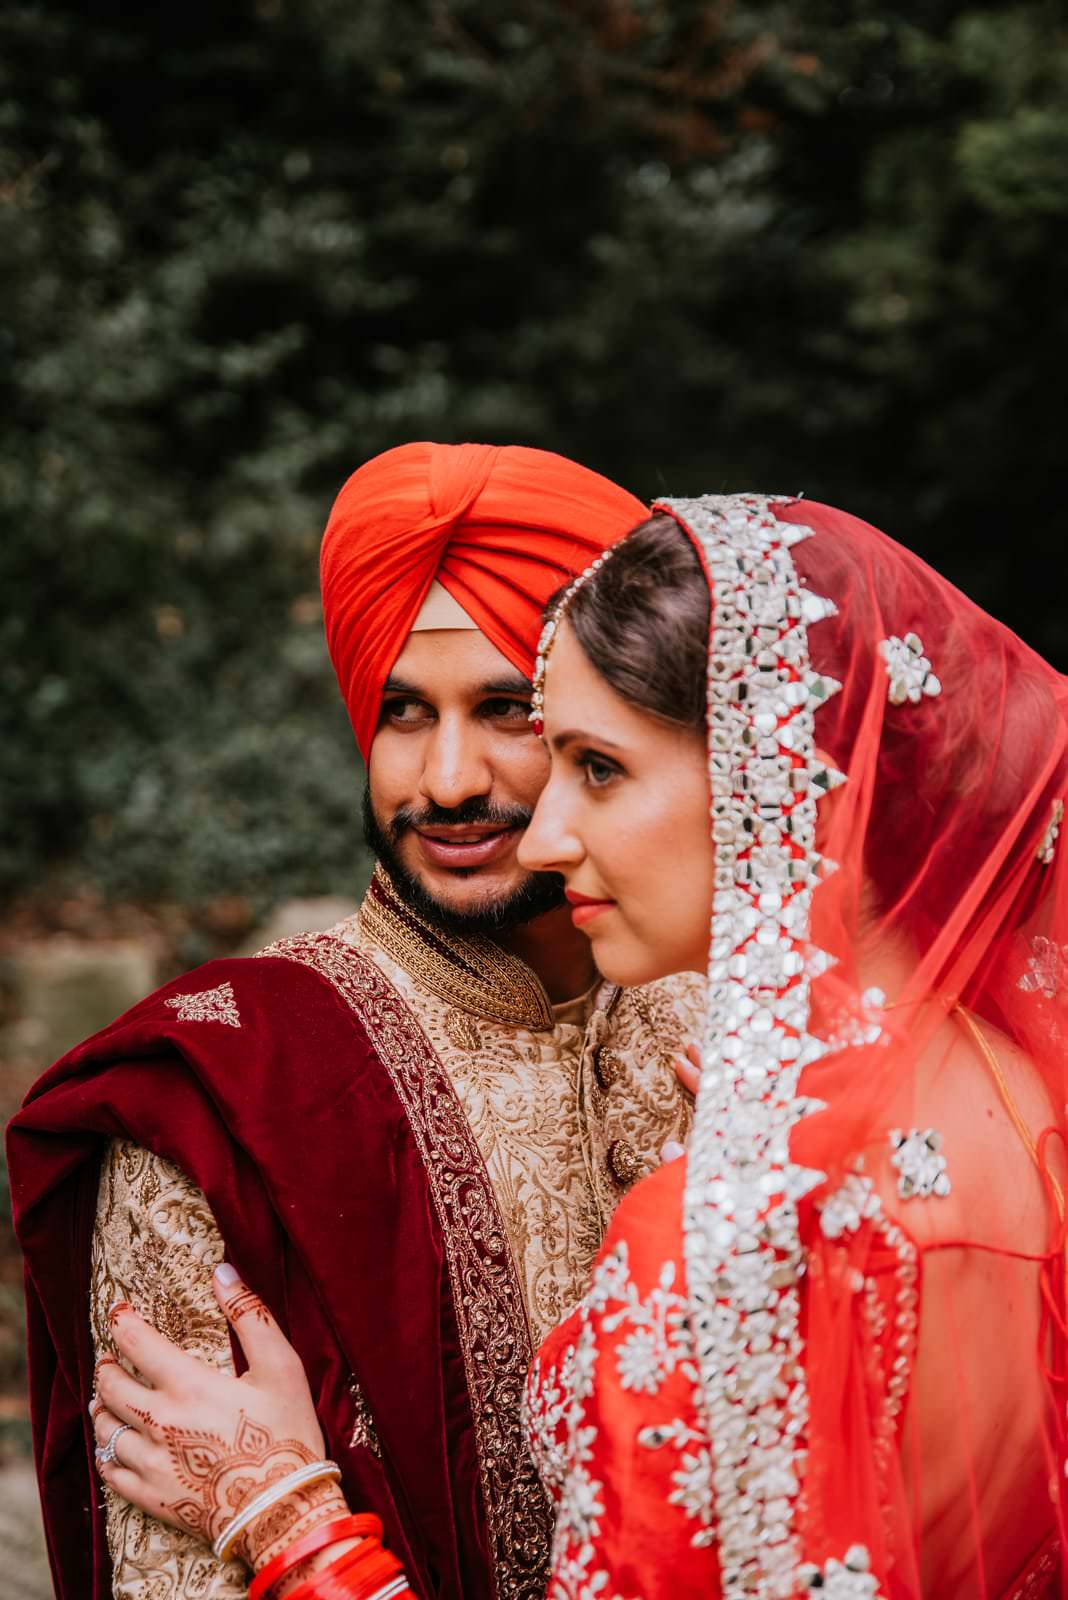 hounslow-sikh-gurdwara-fusion-wedding